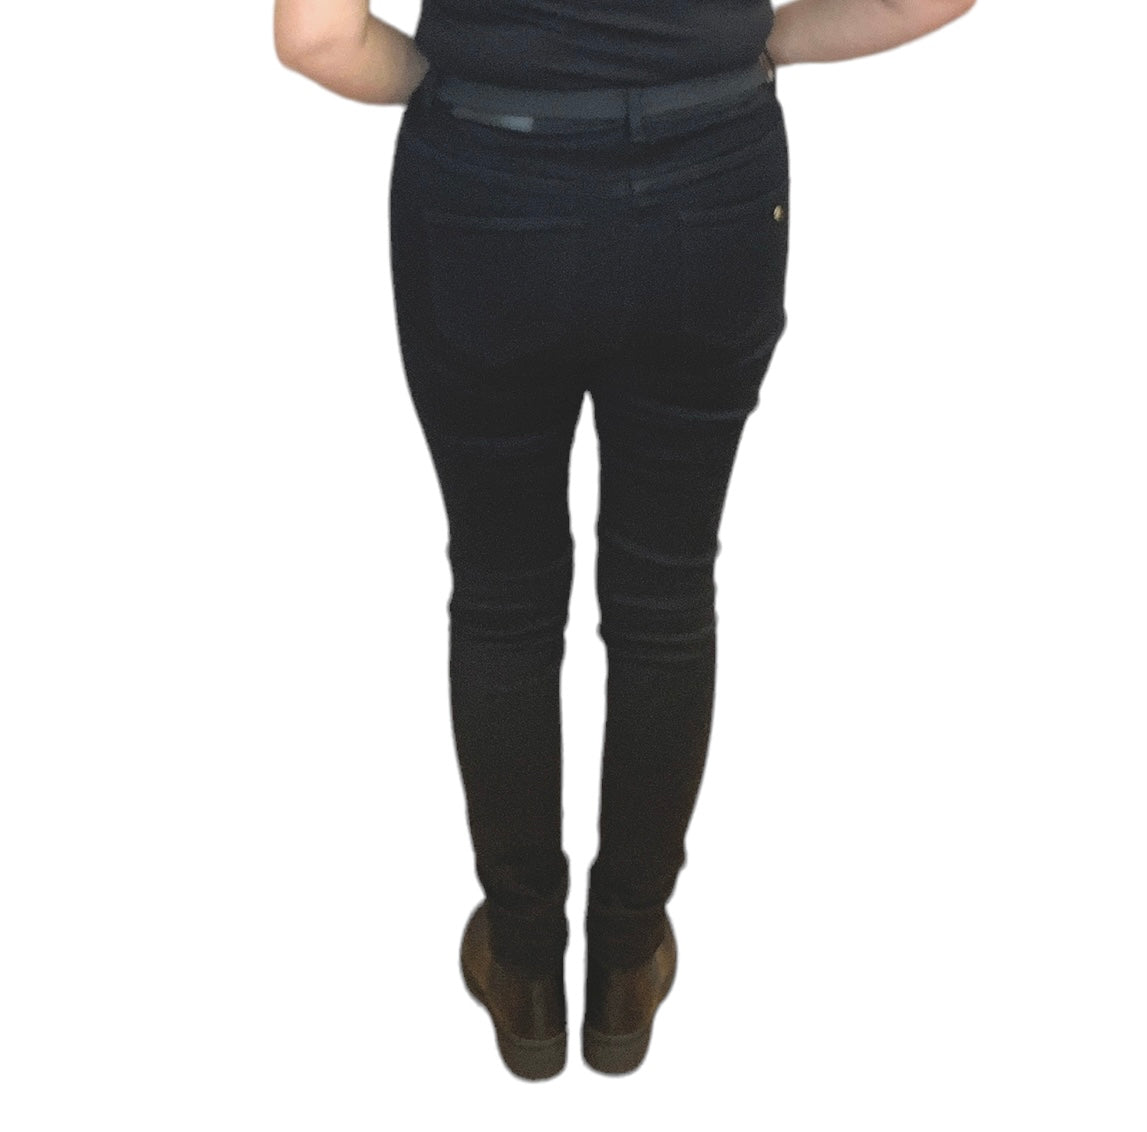 Callie denim jeans, black